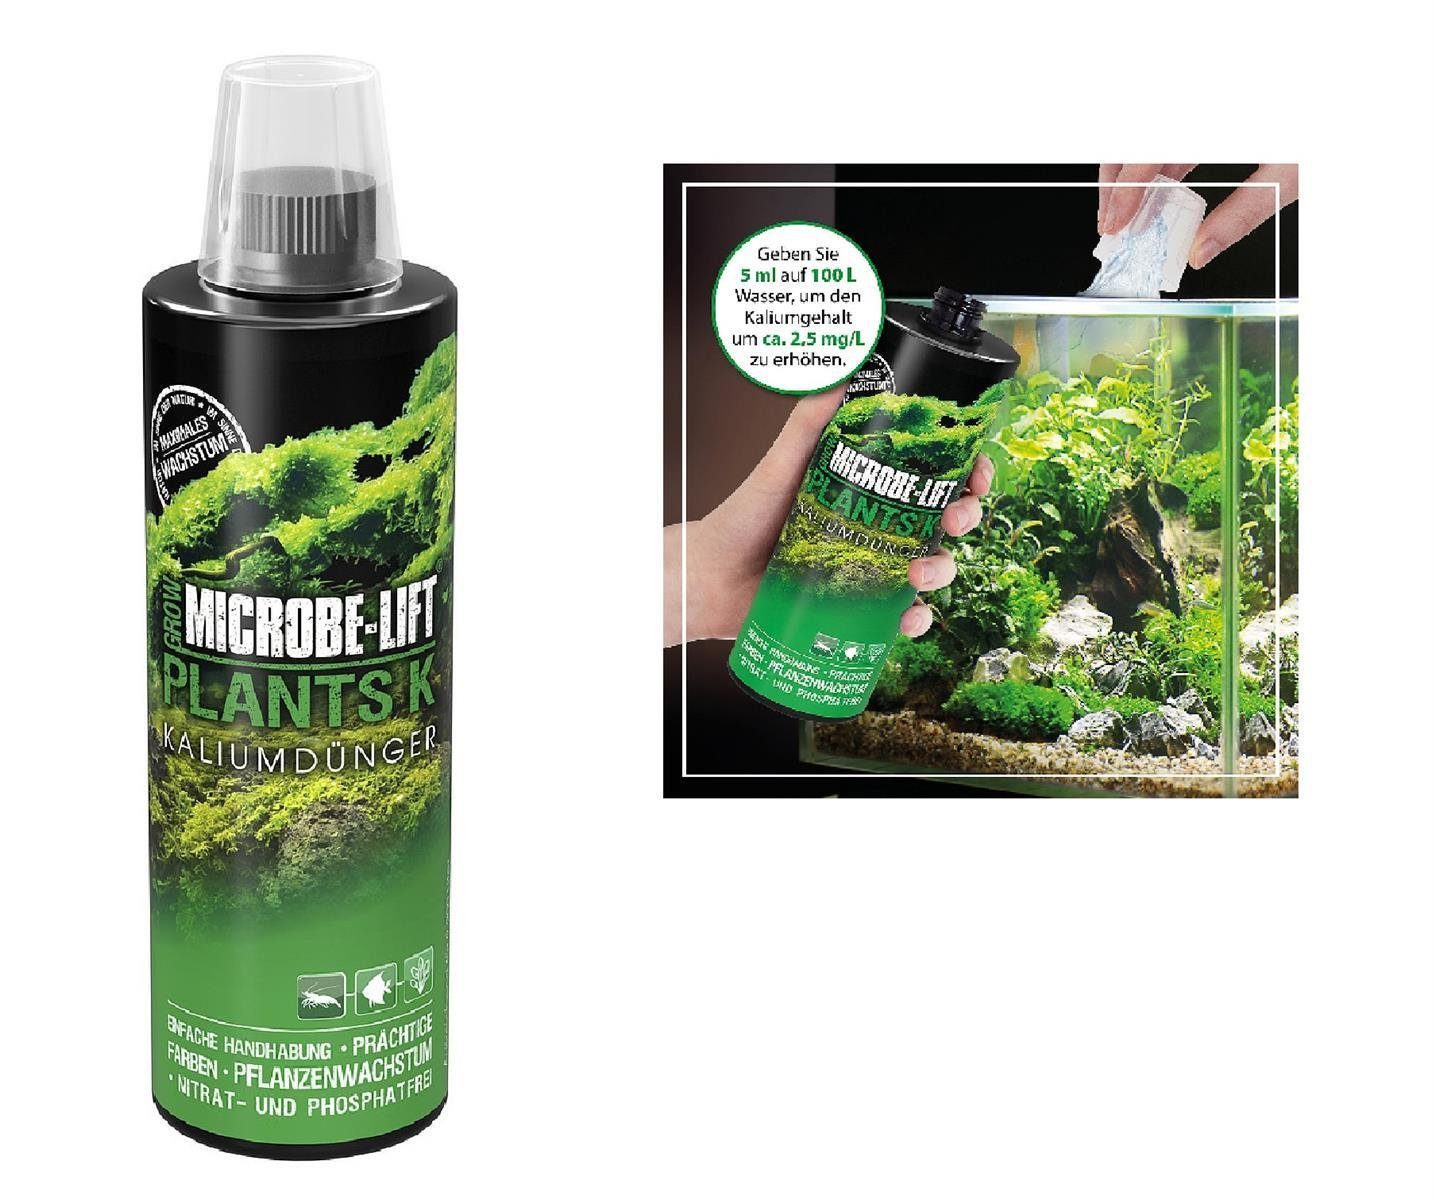 Microbe-Lift Aquarien-Substrat Microbe-Lift flüssiger Kalium Dünger für Pflanzen Plants K 236 ml